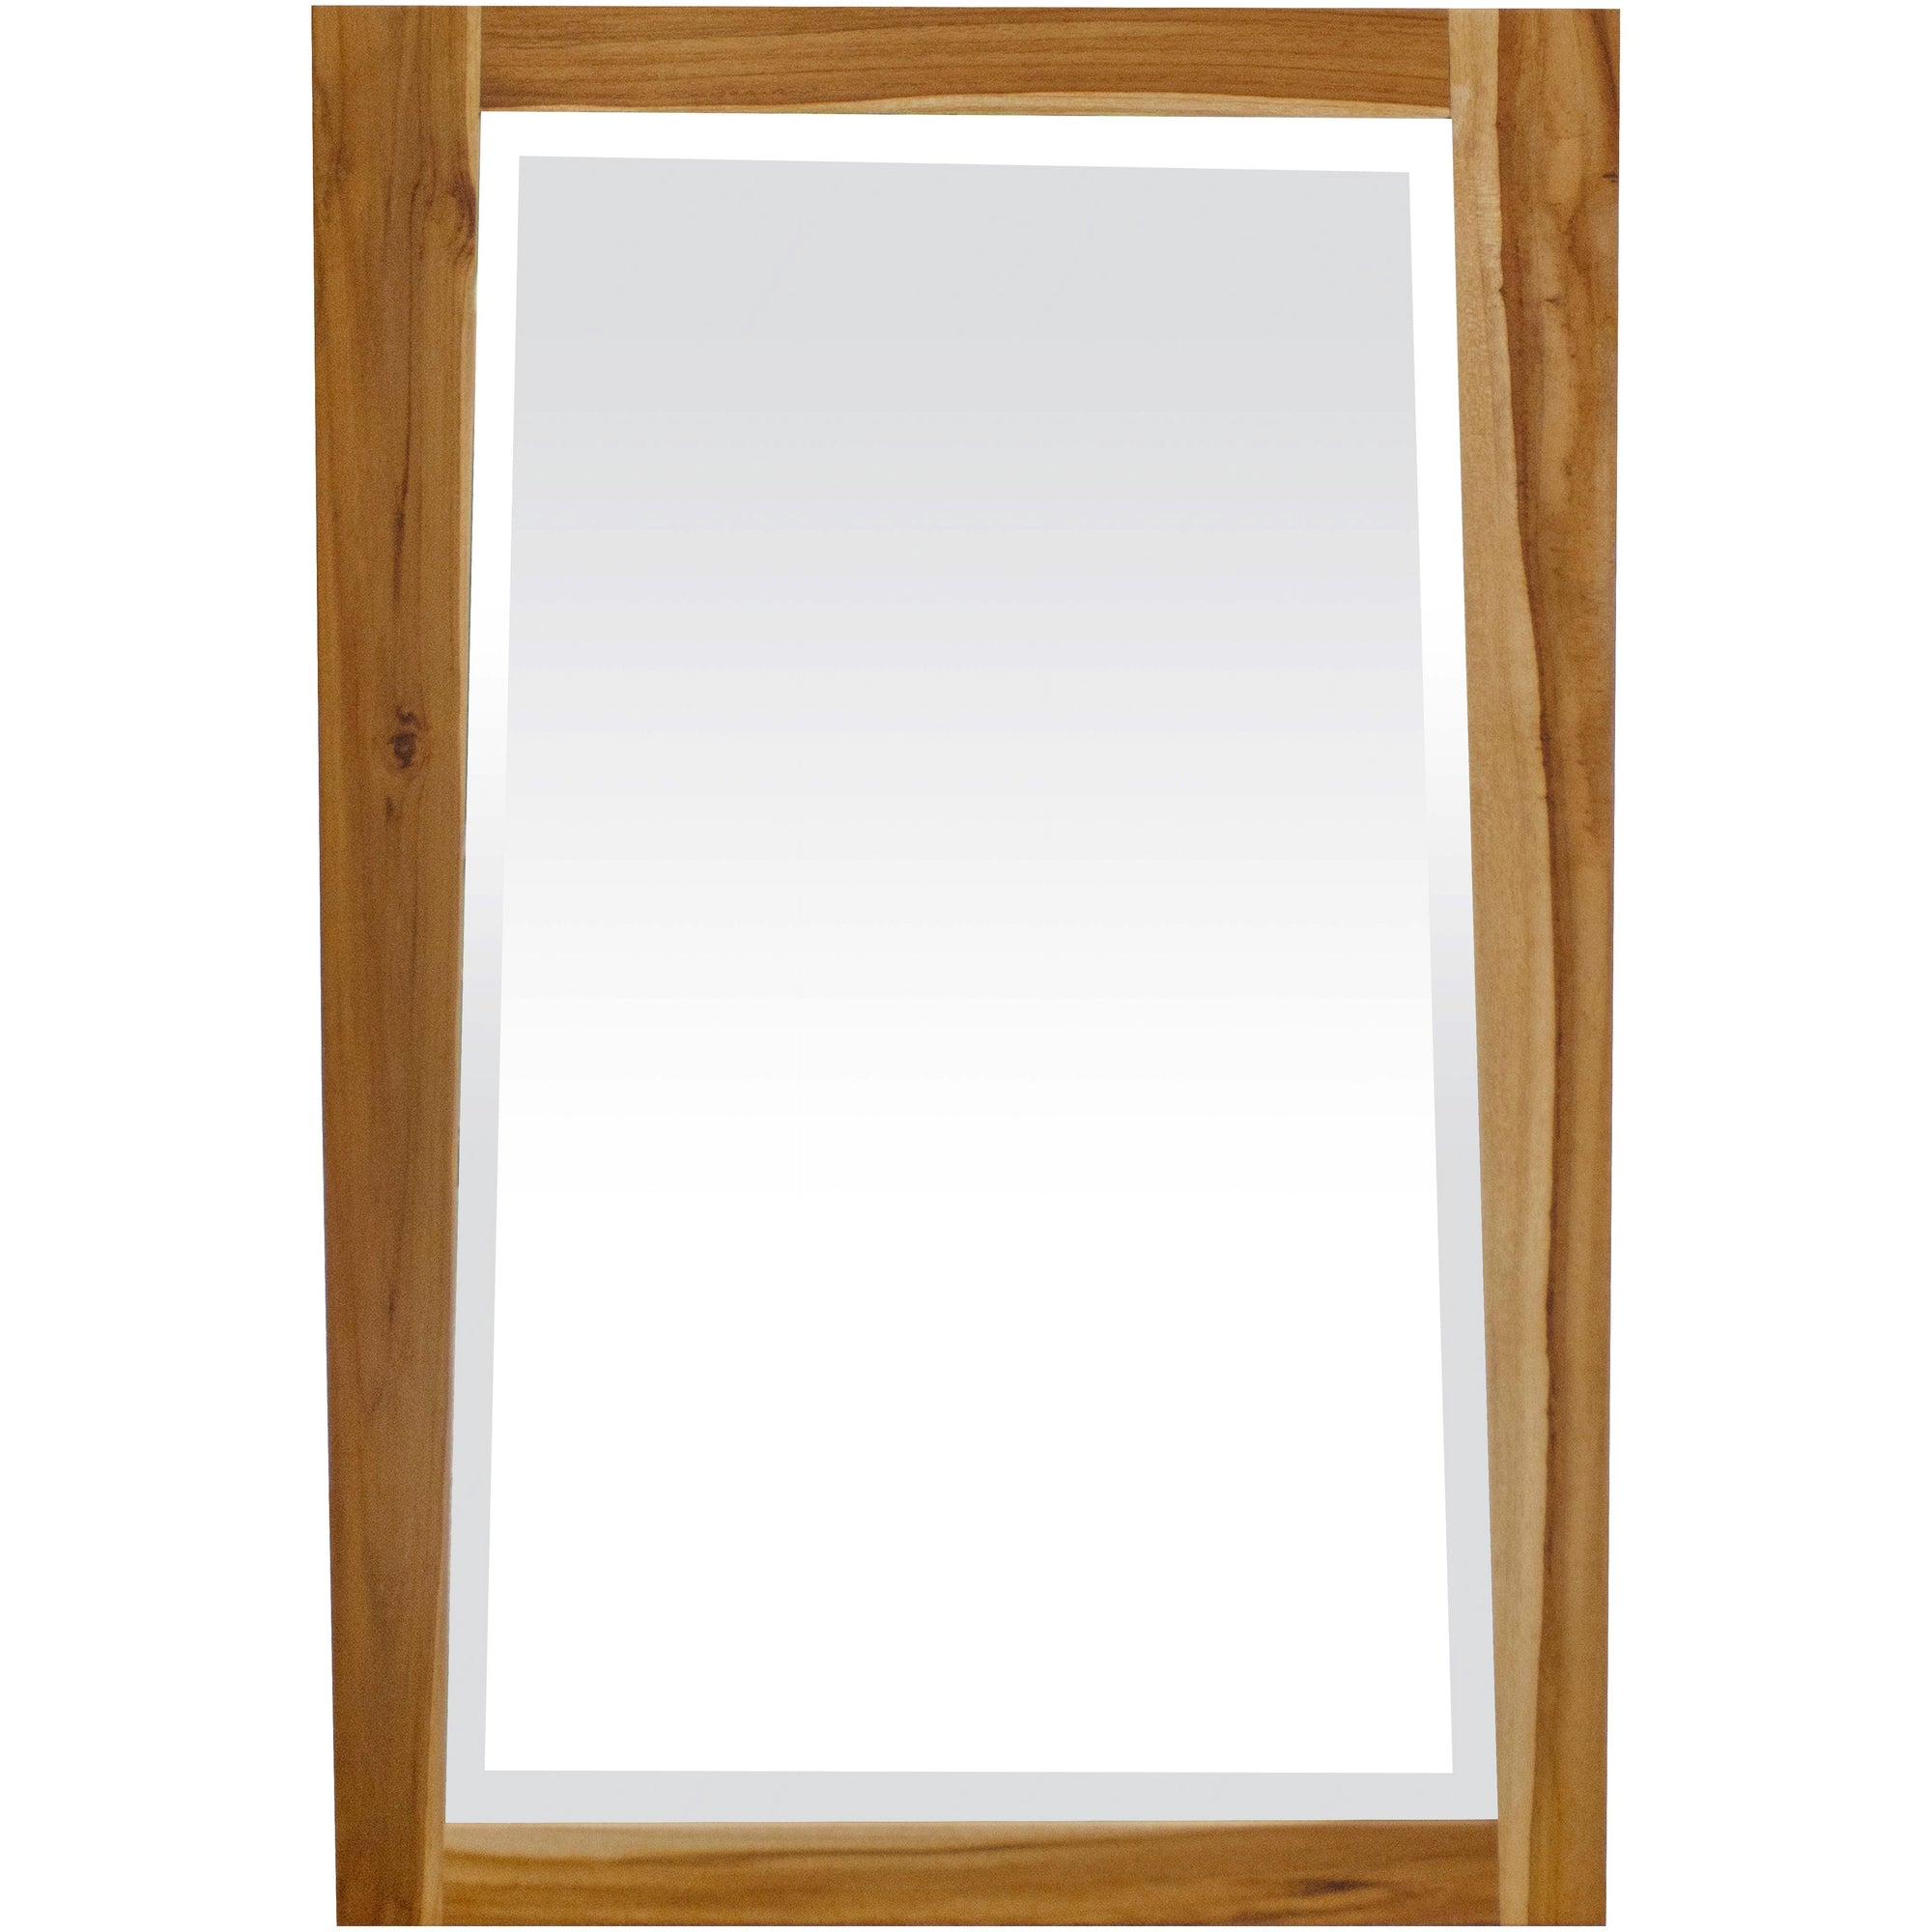 Significado® 30" Teak Wood Bathroom Vanity -  Signifiacado® 12”L Modular Compact Side Vanity with Shelves - Significado® 24" x 35" Teak Wood Wall Mirror